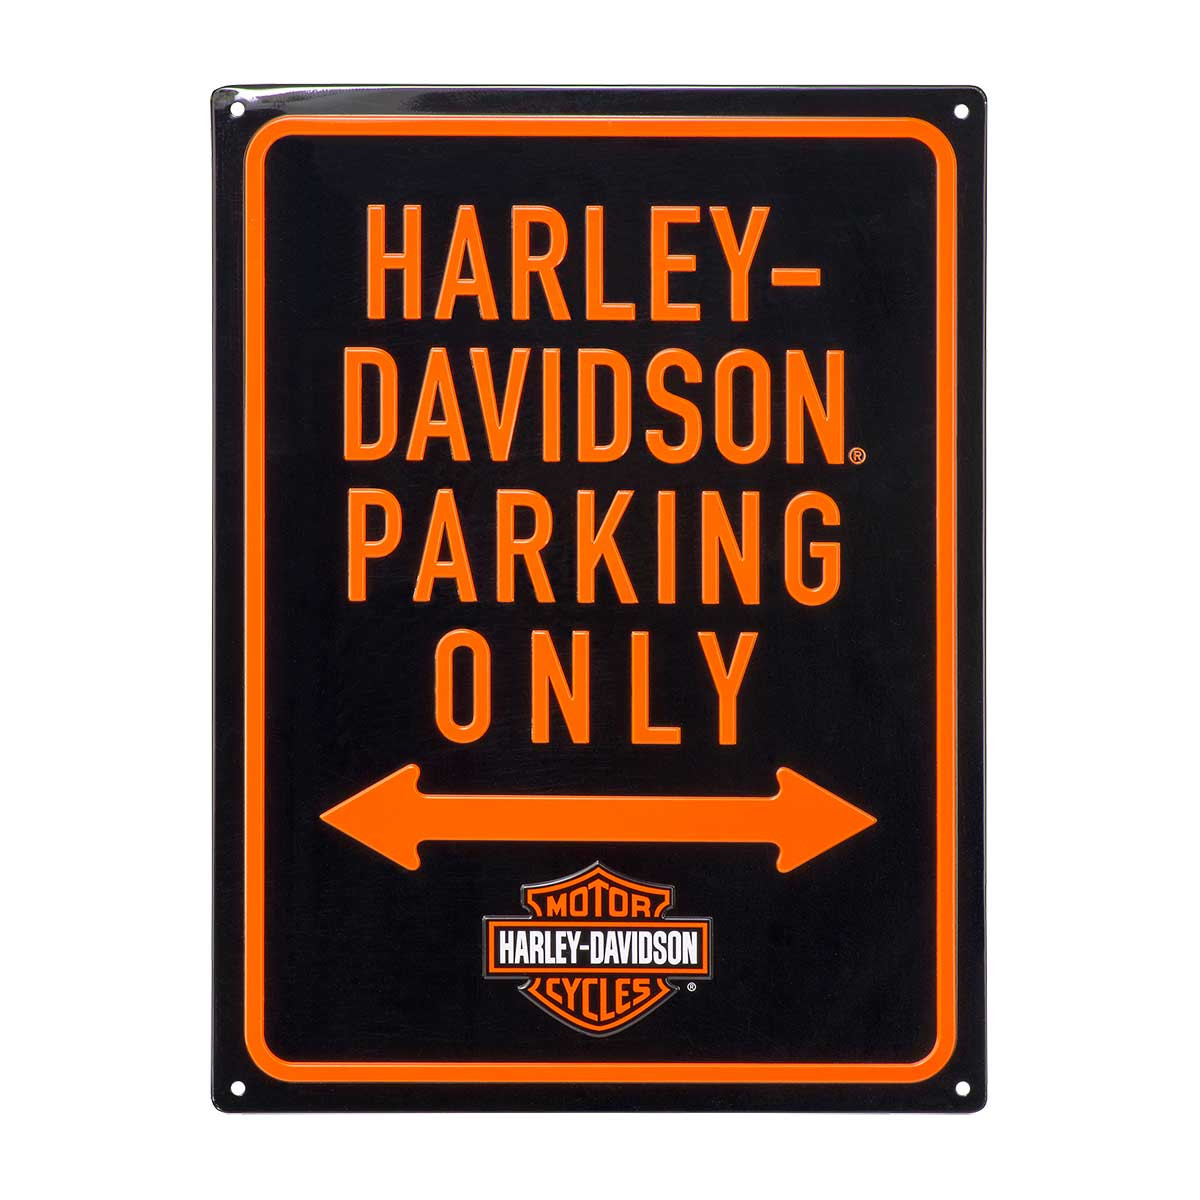 Harley-Davidson Parking Only Tin Sign